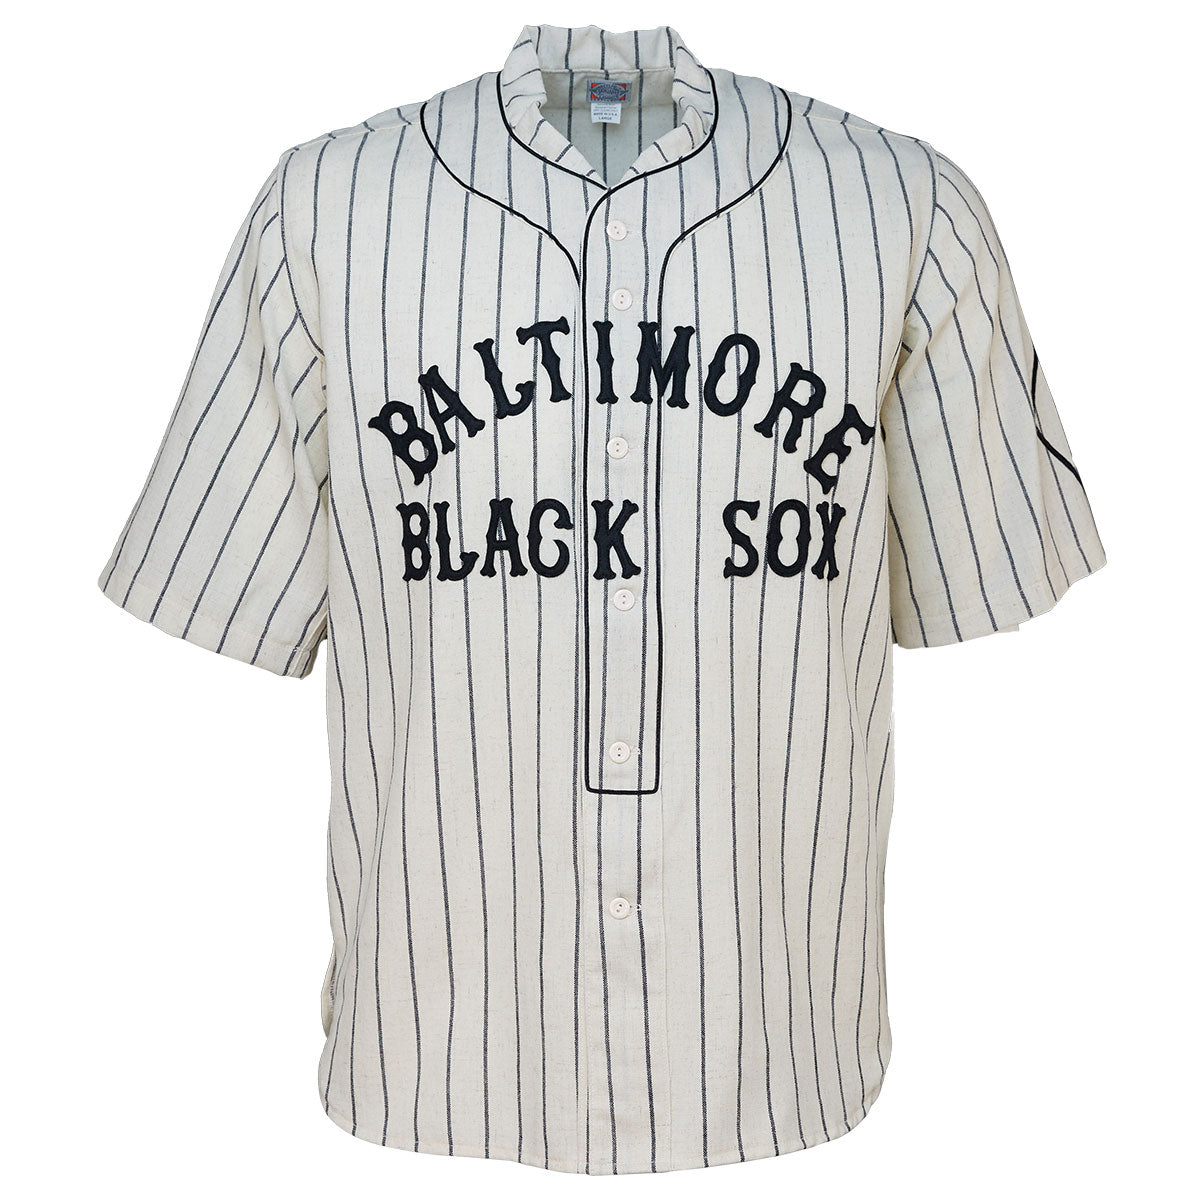 Headgear - Baltimore Black Sox Button Down Jersey